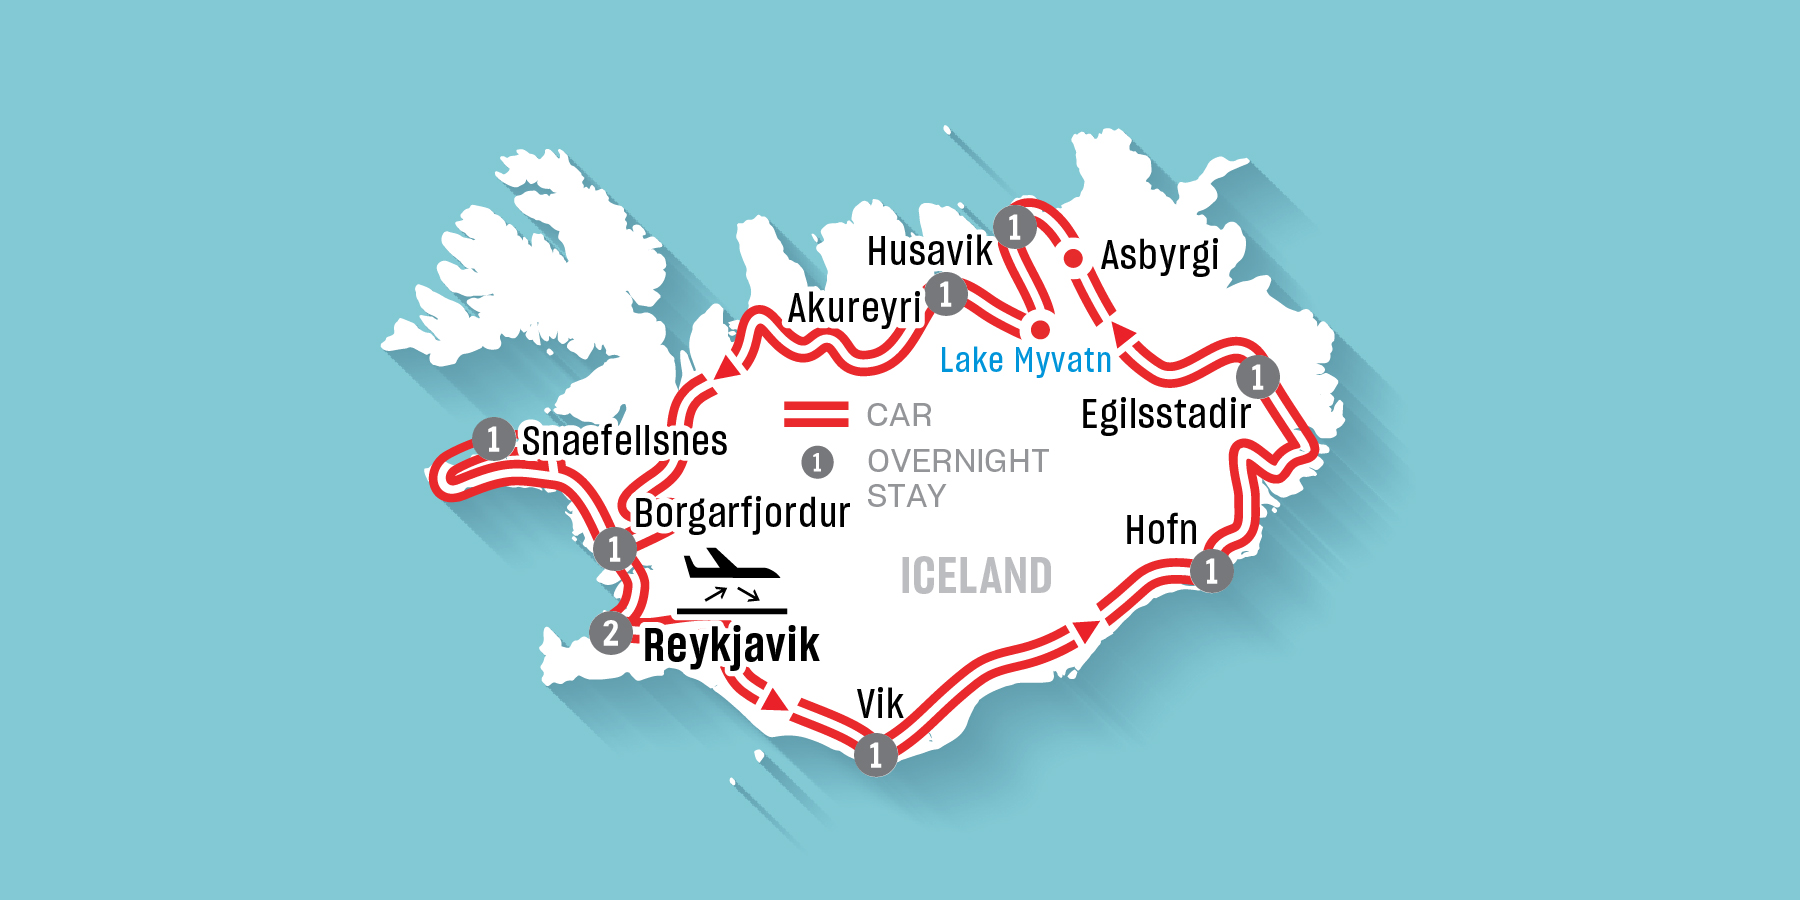 Classic Iceland Map EN ?context=bWFzdGVyfHJvb3R8Mzk0OTcwfGltYWdlL2pwZWd8aDY1L2g2OC84ODEyODM2NjUxMDM4LmpwZ3w1NzUxYTU4NzdiMzgzMWRmMzg0YjQ0NTE1YTcwMmVkOGYxN2MxZjZiNTg5ZDc3Nzc0YmRmMTA4YTNjYTYzOGNl